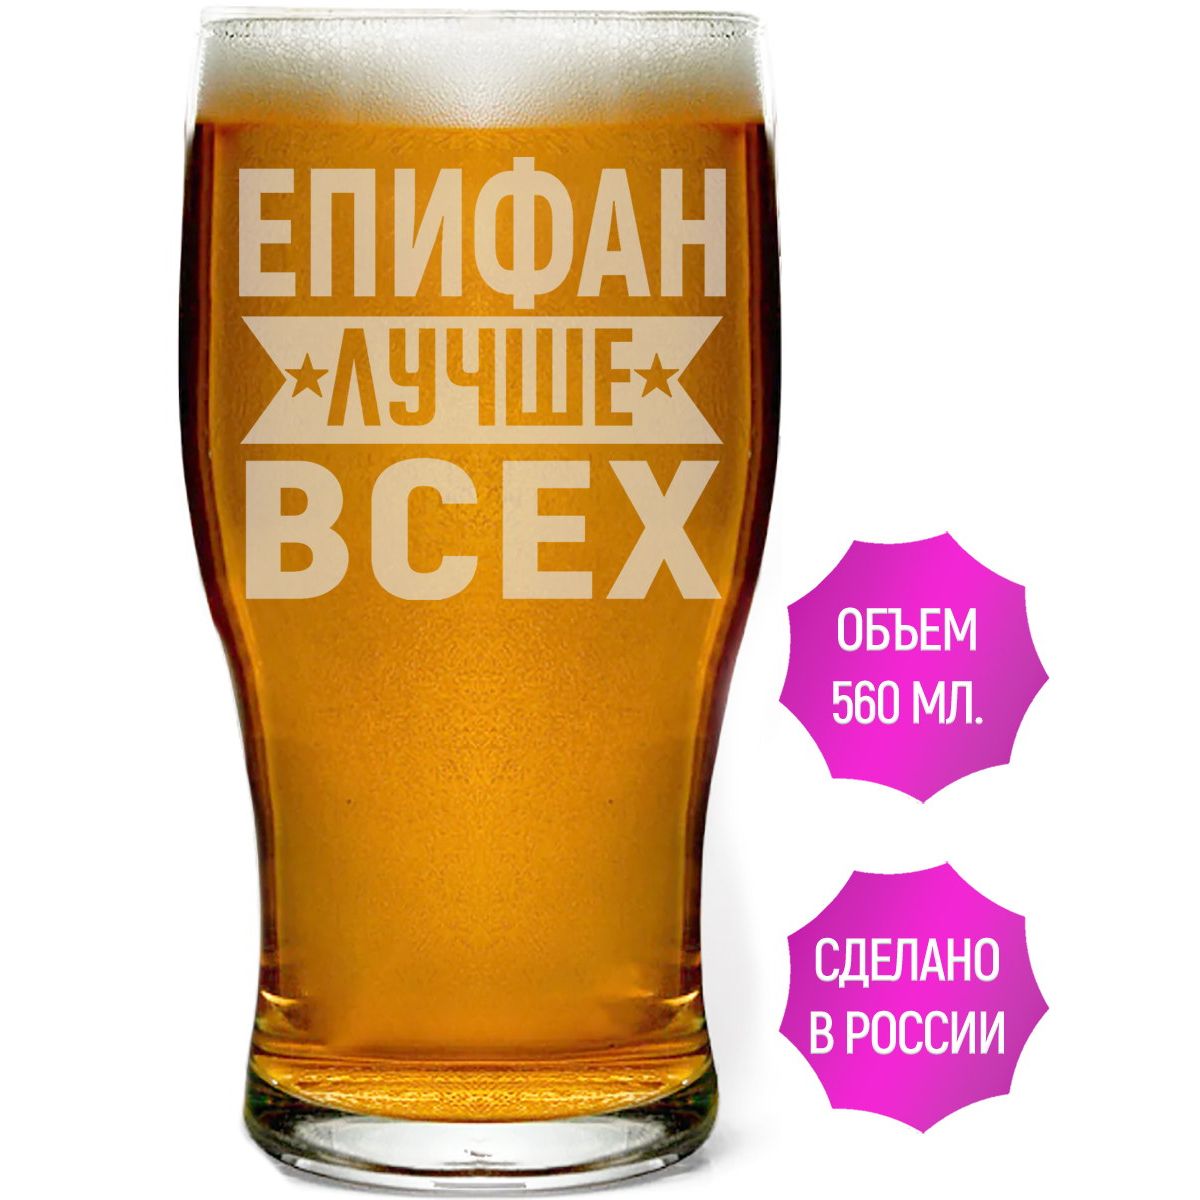 Стакан AV Podarki Епифан лучше всех 580 мл для пива